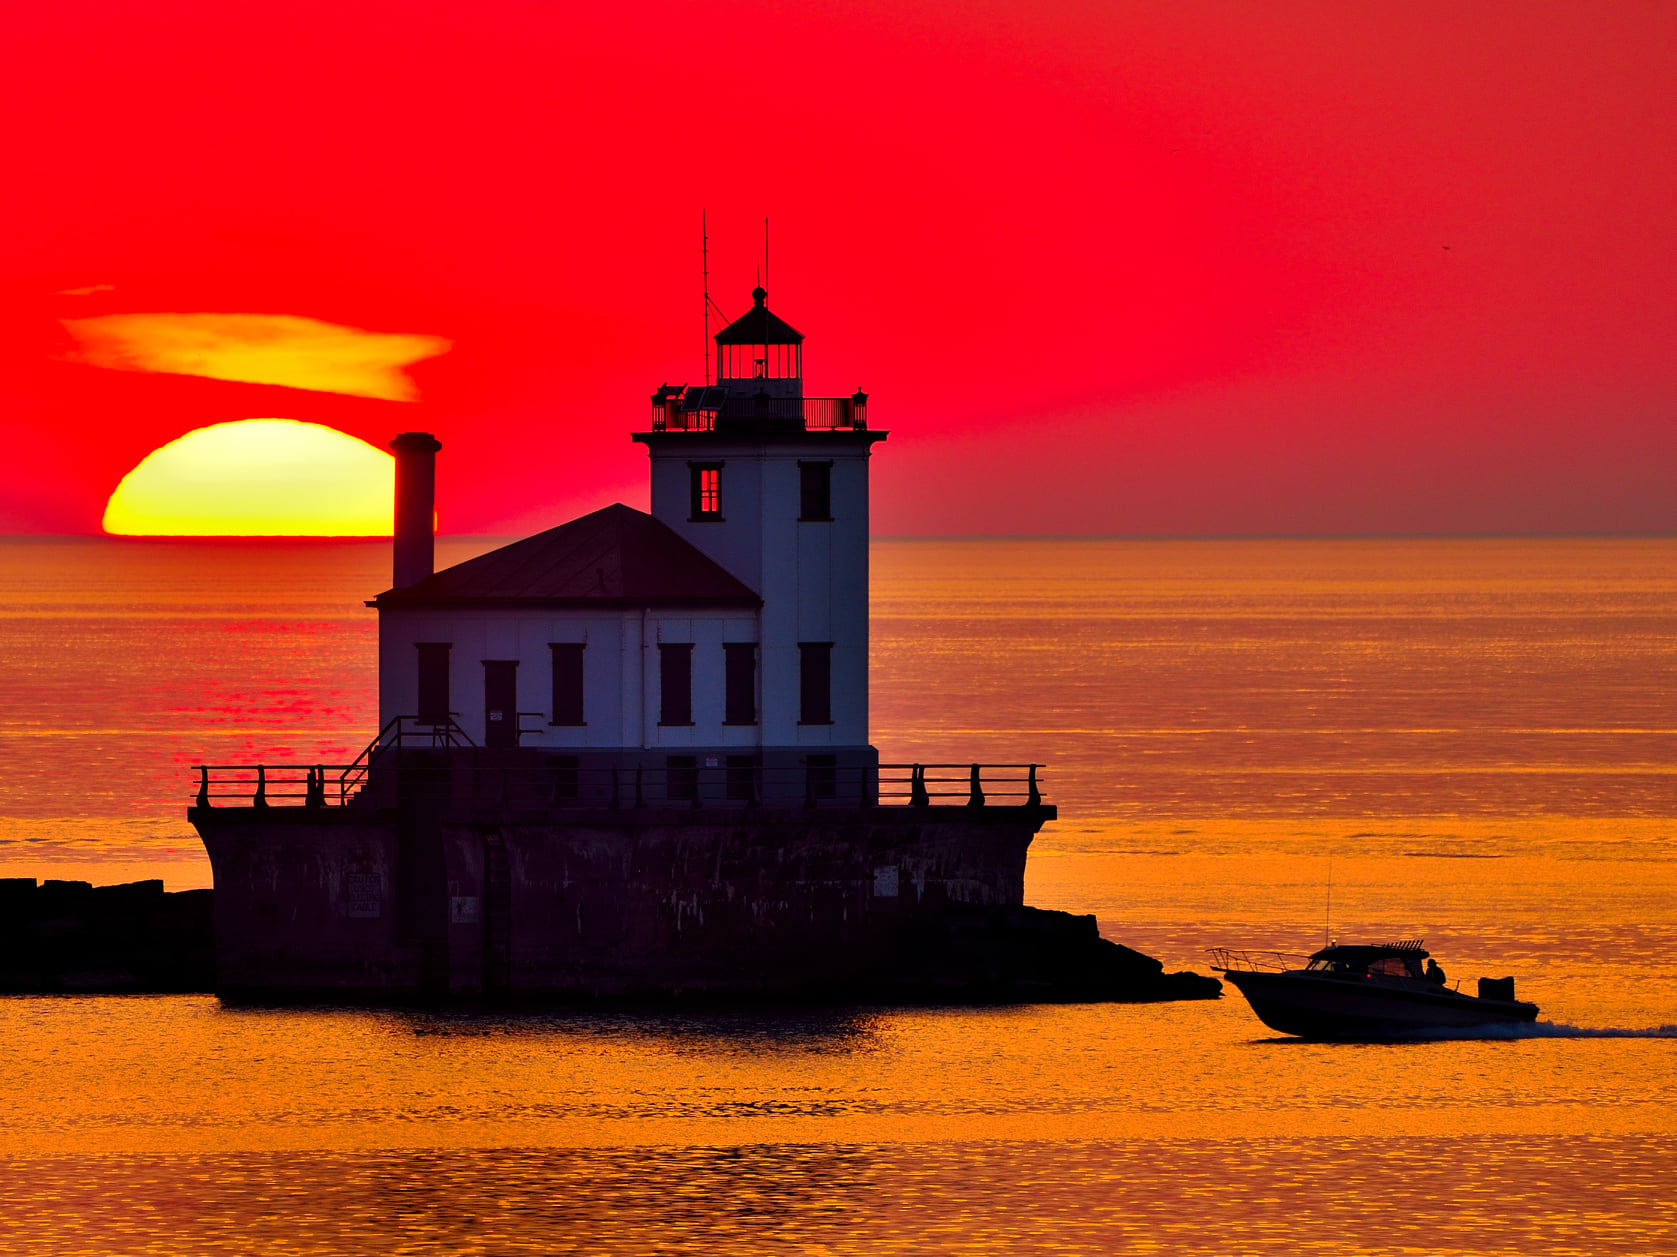 most picturesque - sunset lighthouse (Michelle Parkhurst)